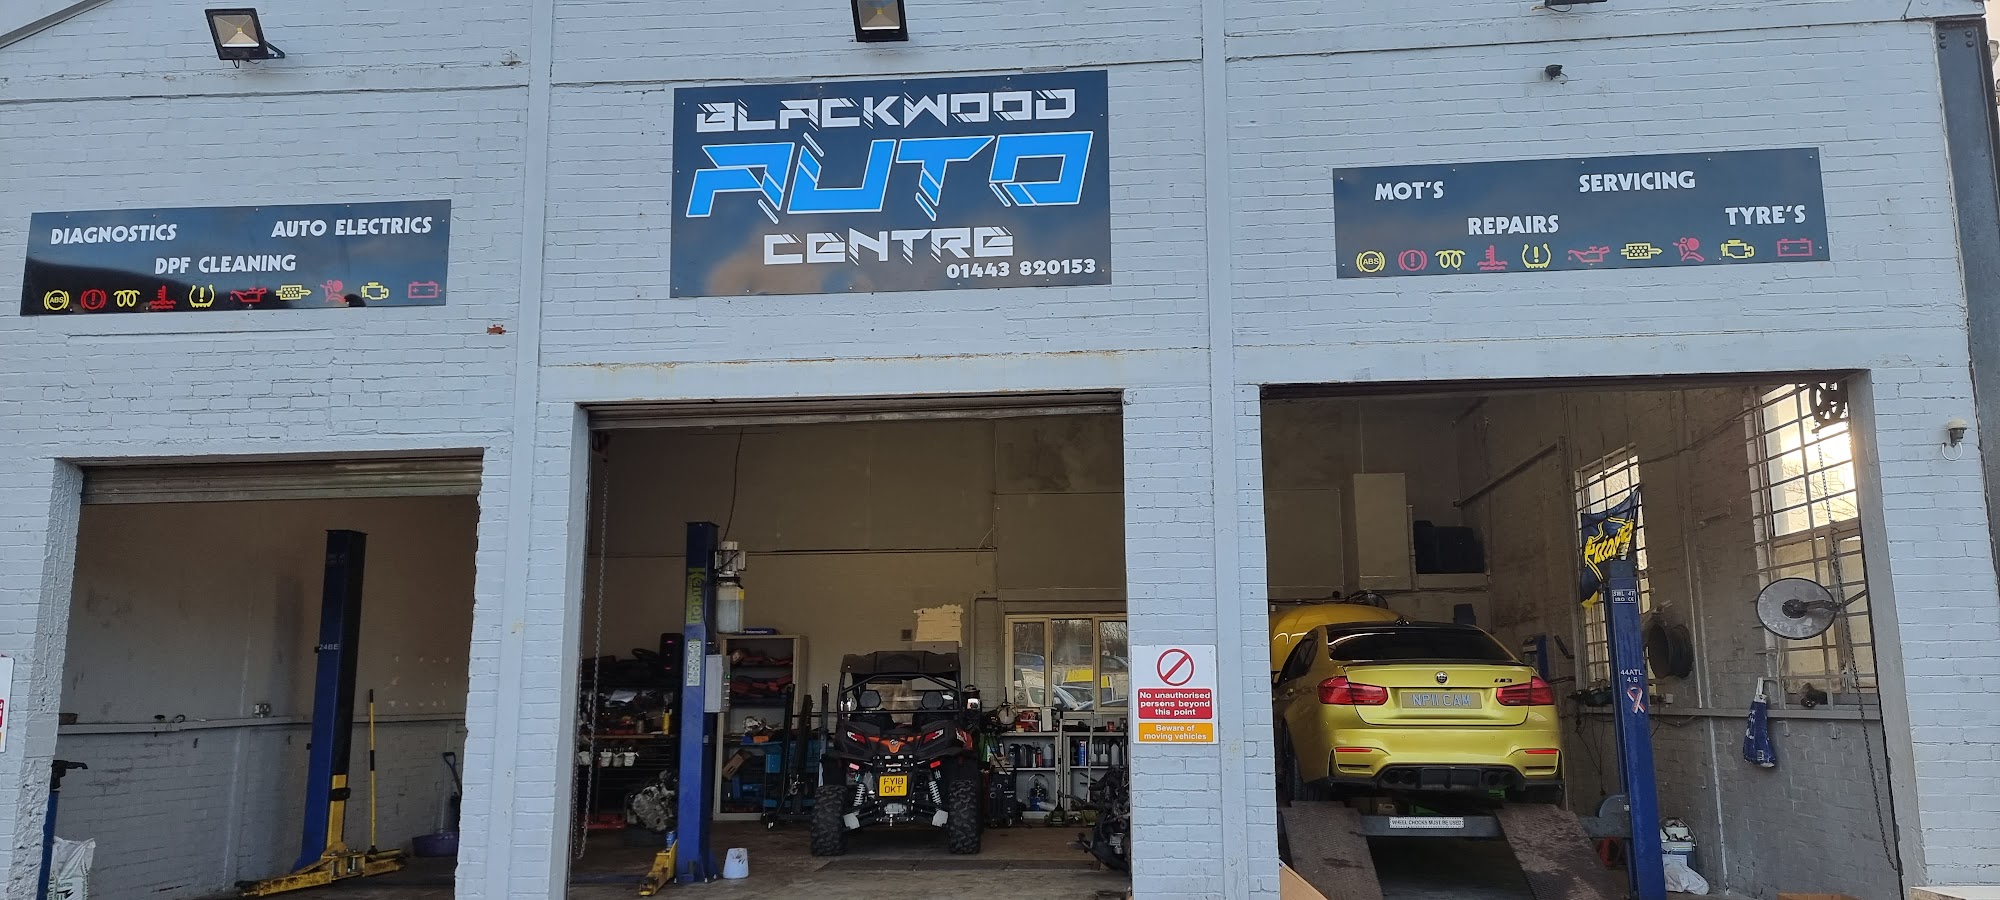 Blackwood auto centre ltd